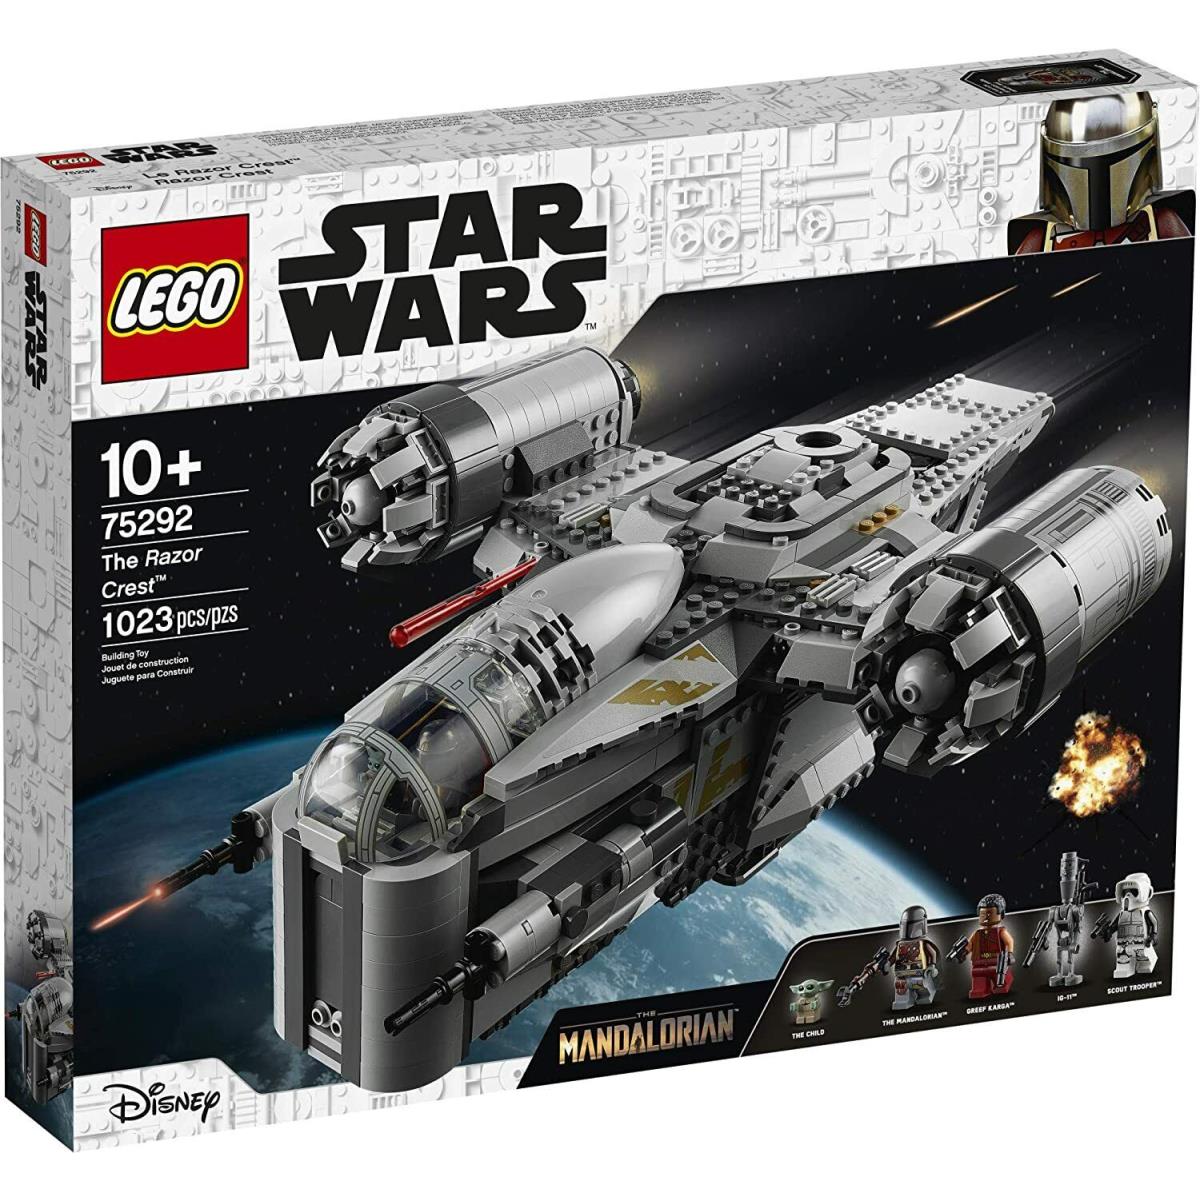 Lego Star Wars The Razor Crest The Mandalorian 1ST Box Version Set 75292